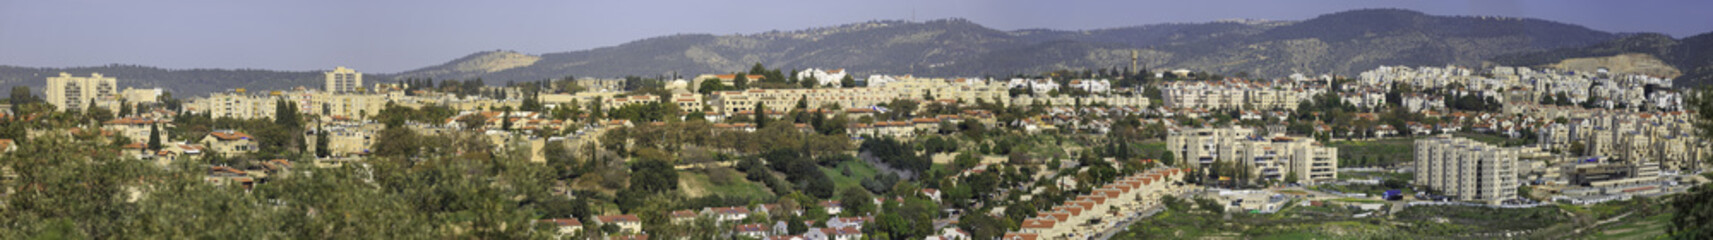 Fototapeta na wymiar Wery wide panorama of Beit Shemesh